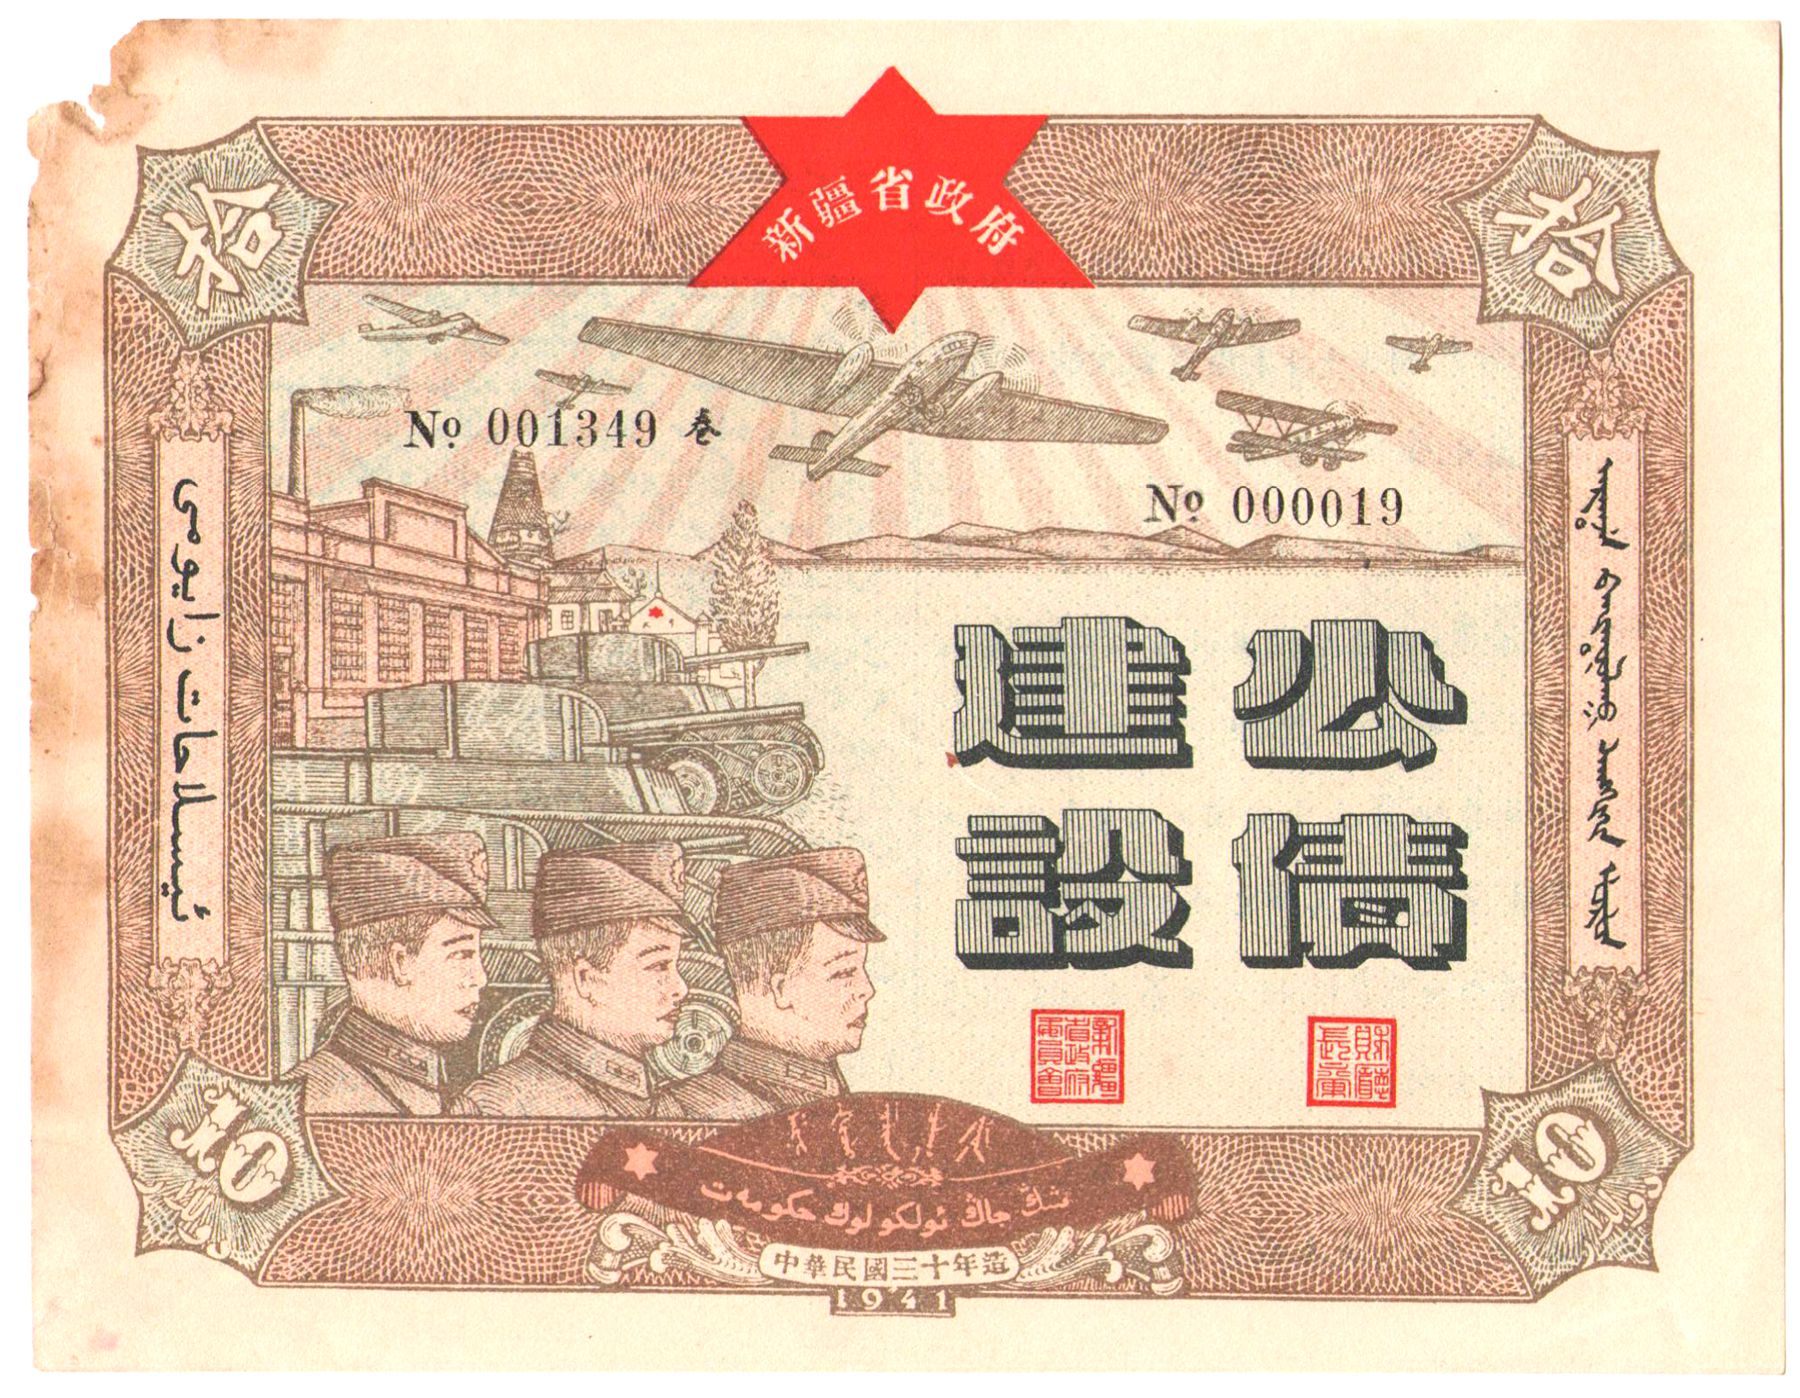 B2962, China Sinkiang Province Construction Bond, 10 Dollars, 1941